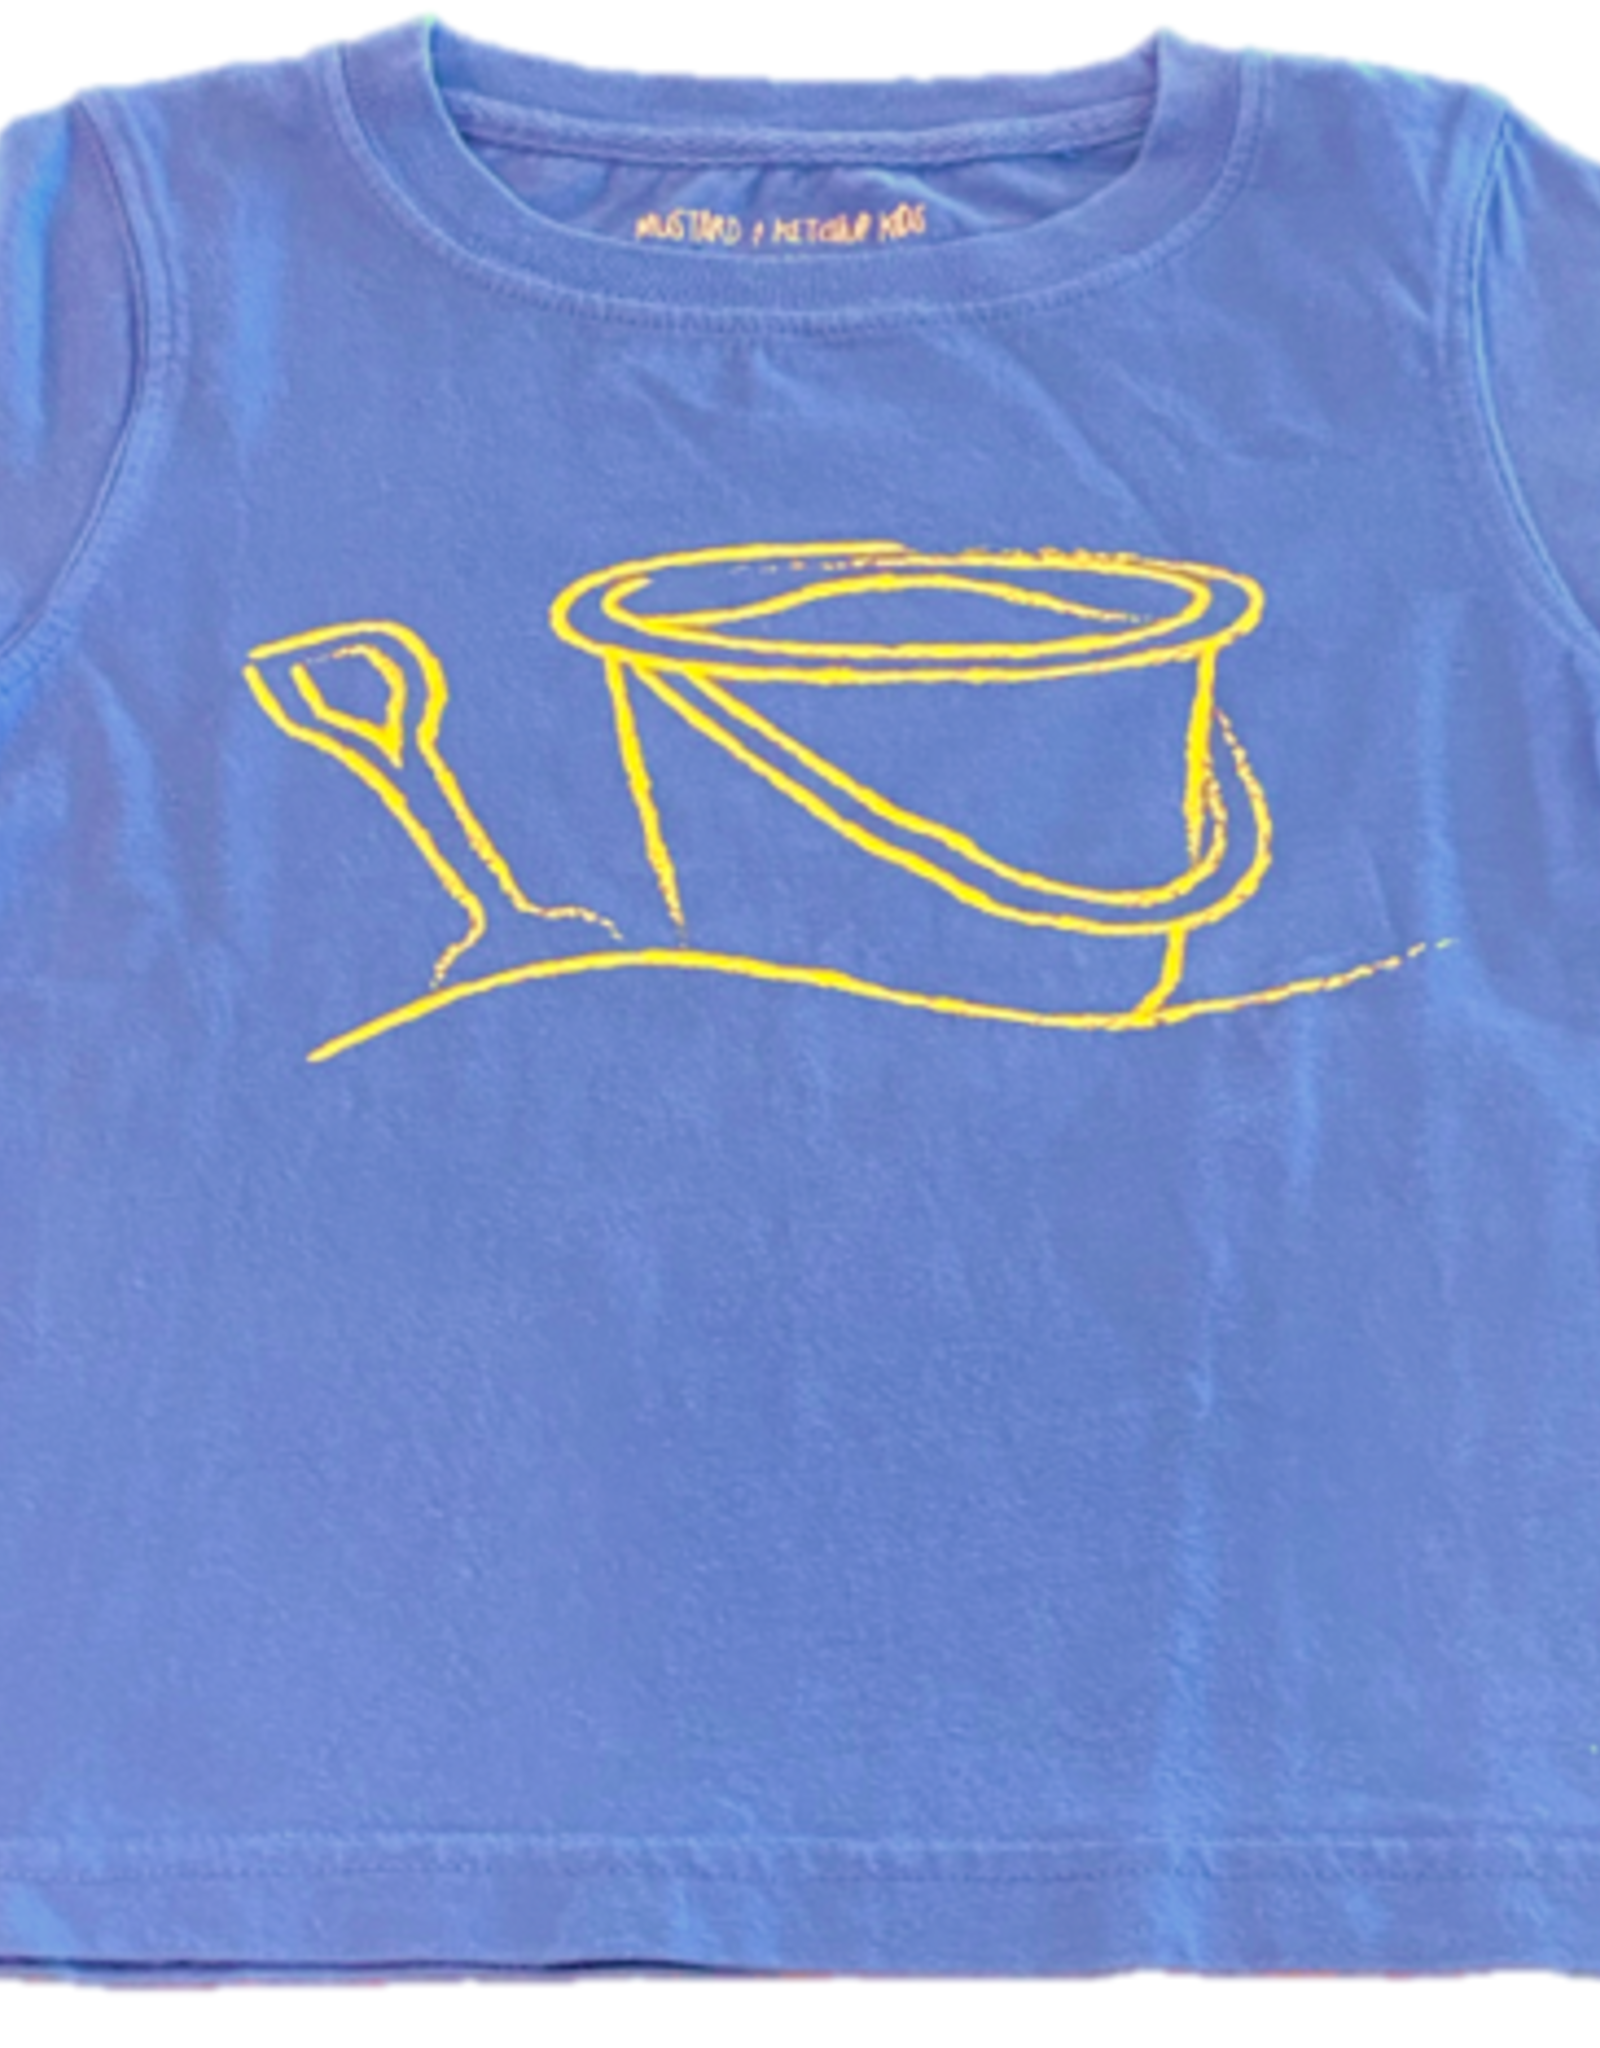 Mustard & ketchup Blue Sand Bucket Short Sleeve Shirt